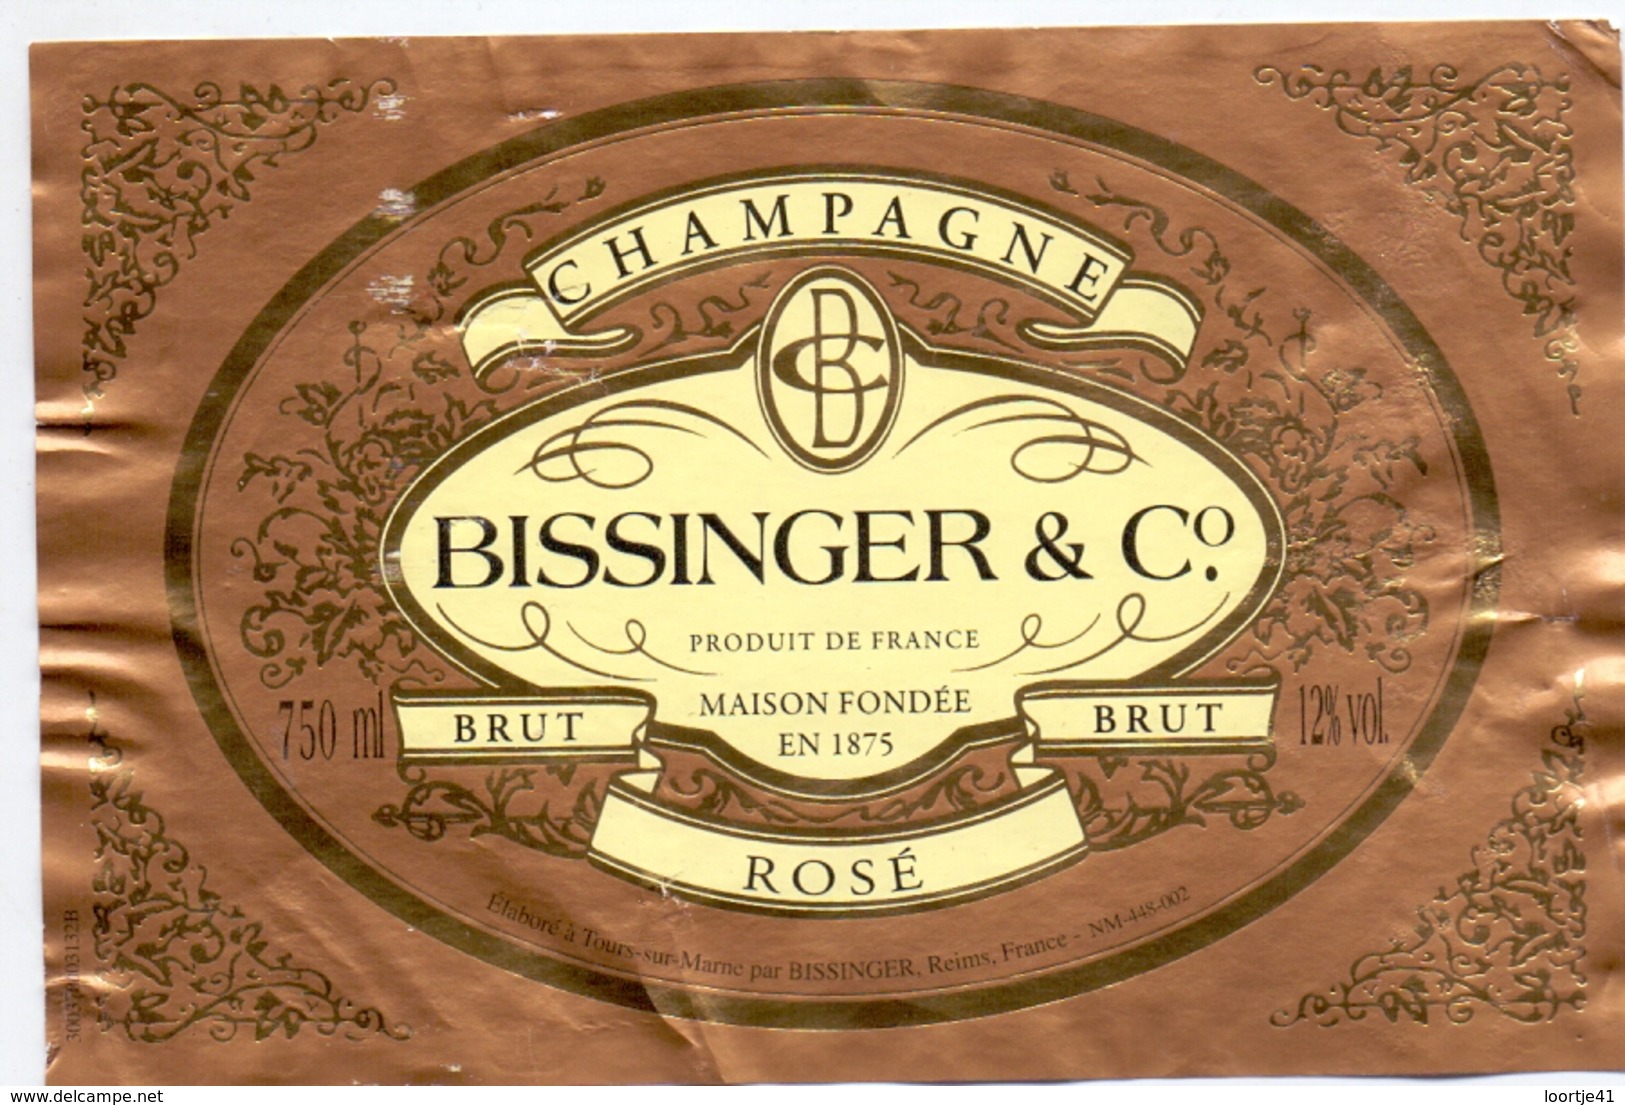 Champagne - - - Bissinger etiquette - Rosé etiket wijn - - vin Champagne